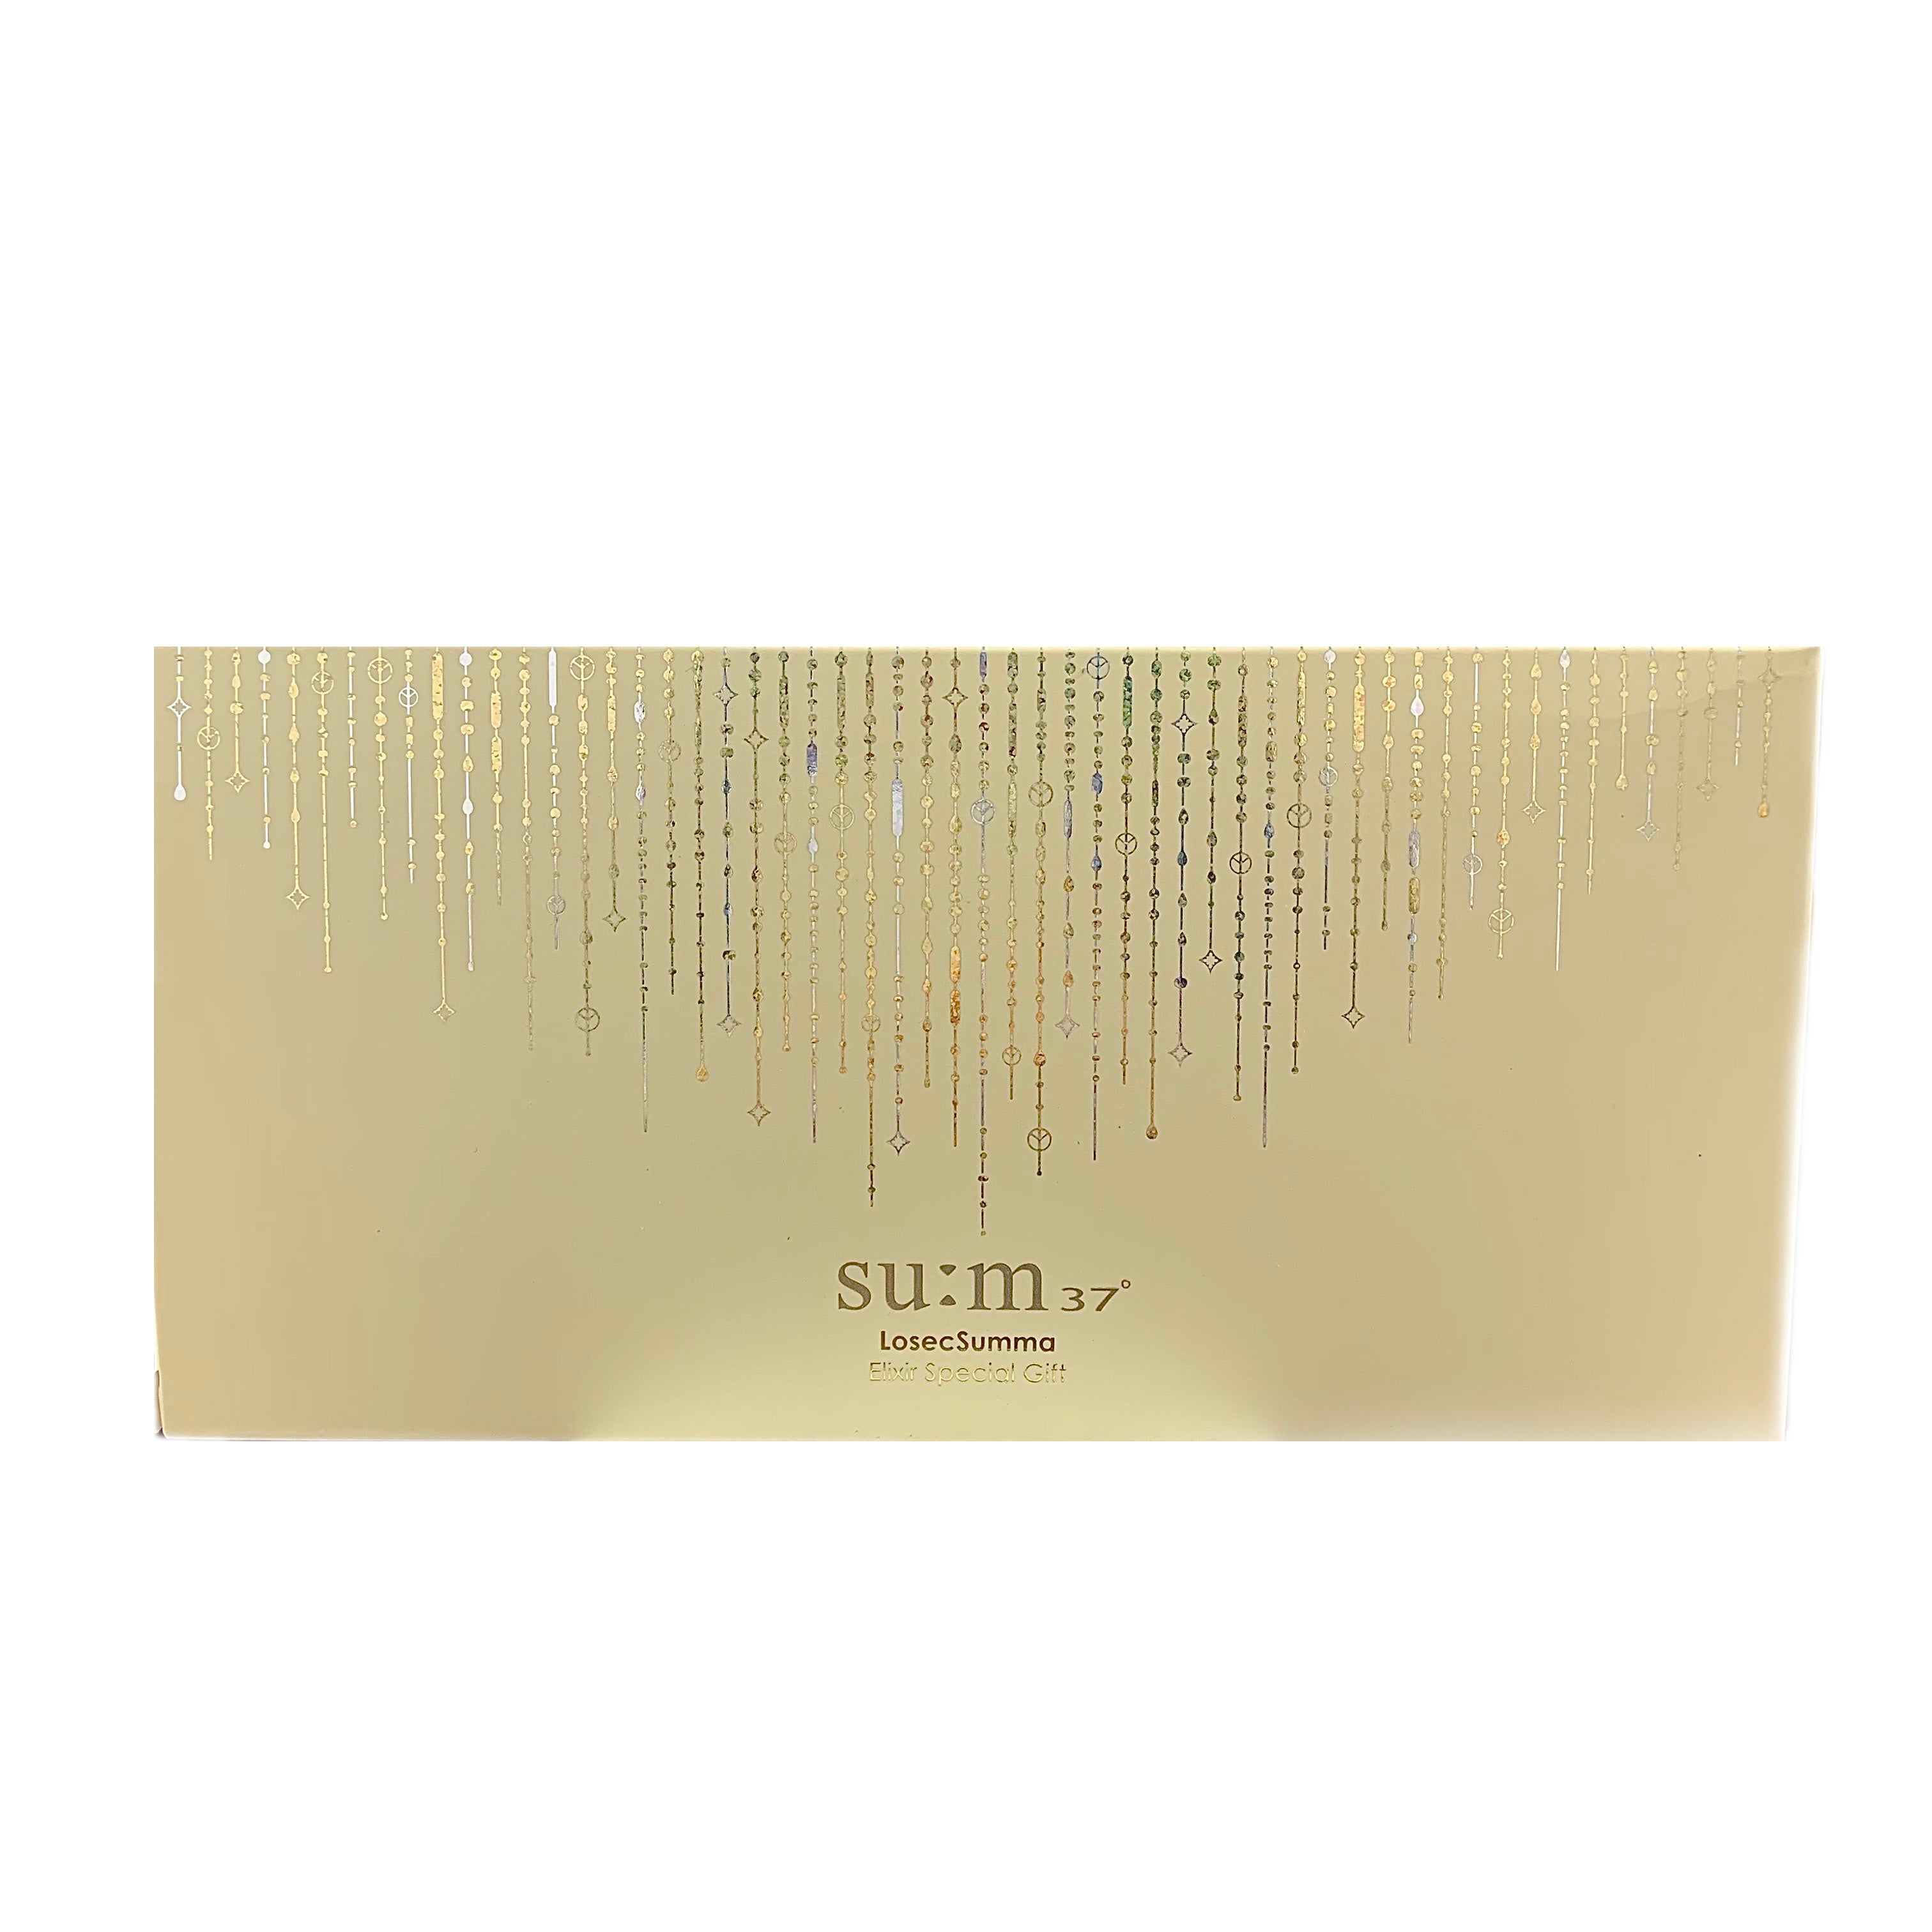 Sum37 LosecSumma Elixir Special Gift 5pcs Set Facial Skincare Moisture